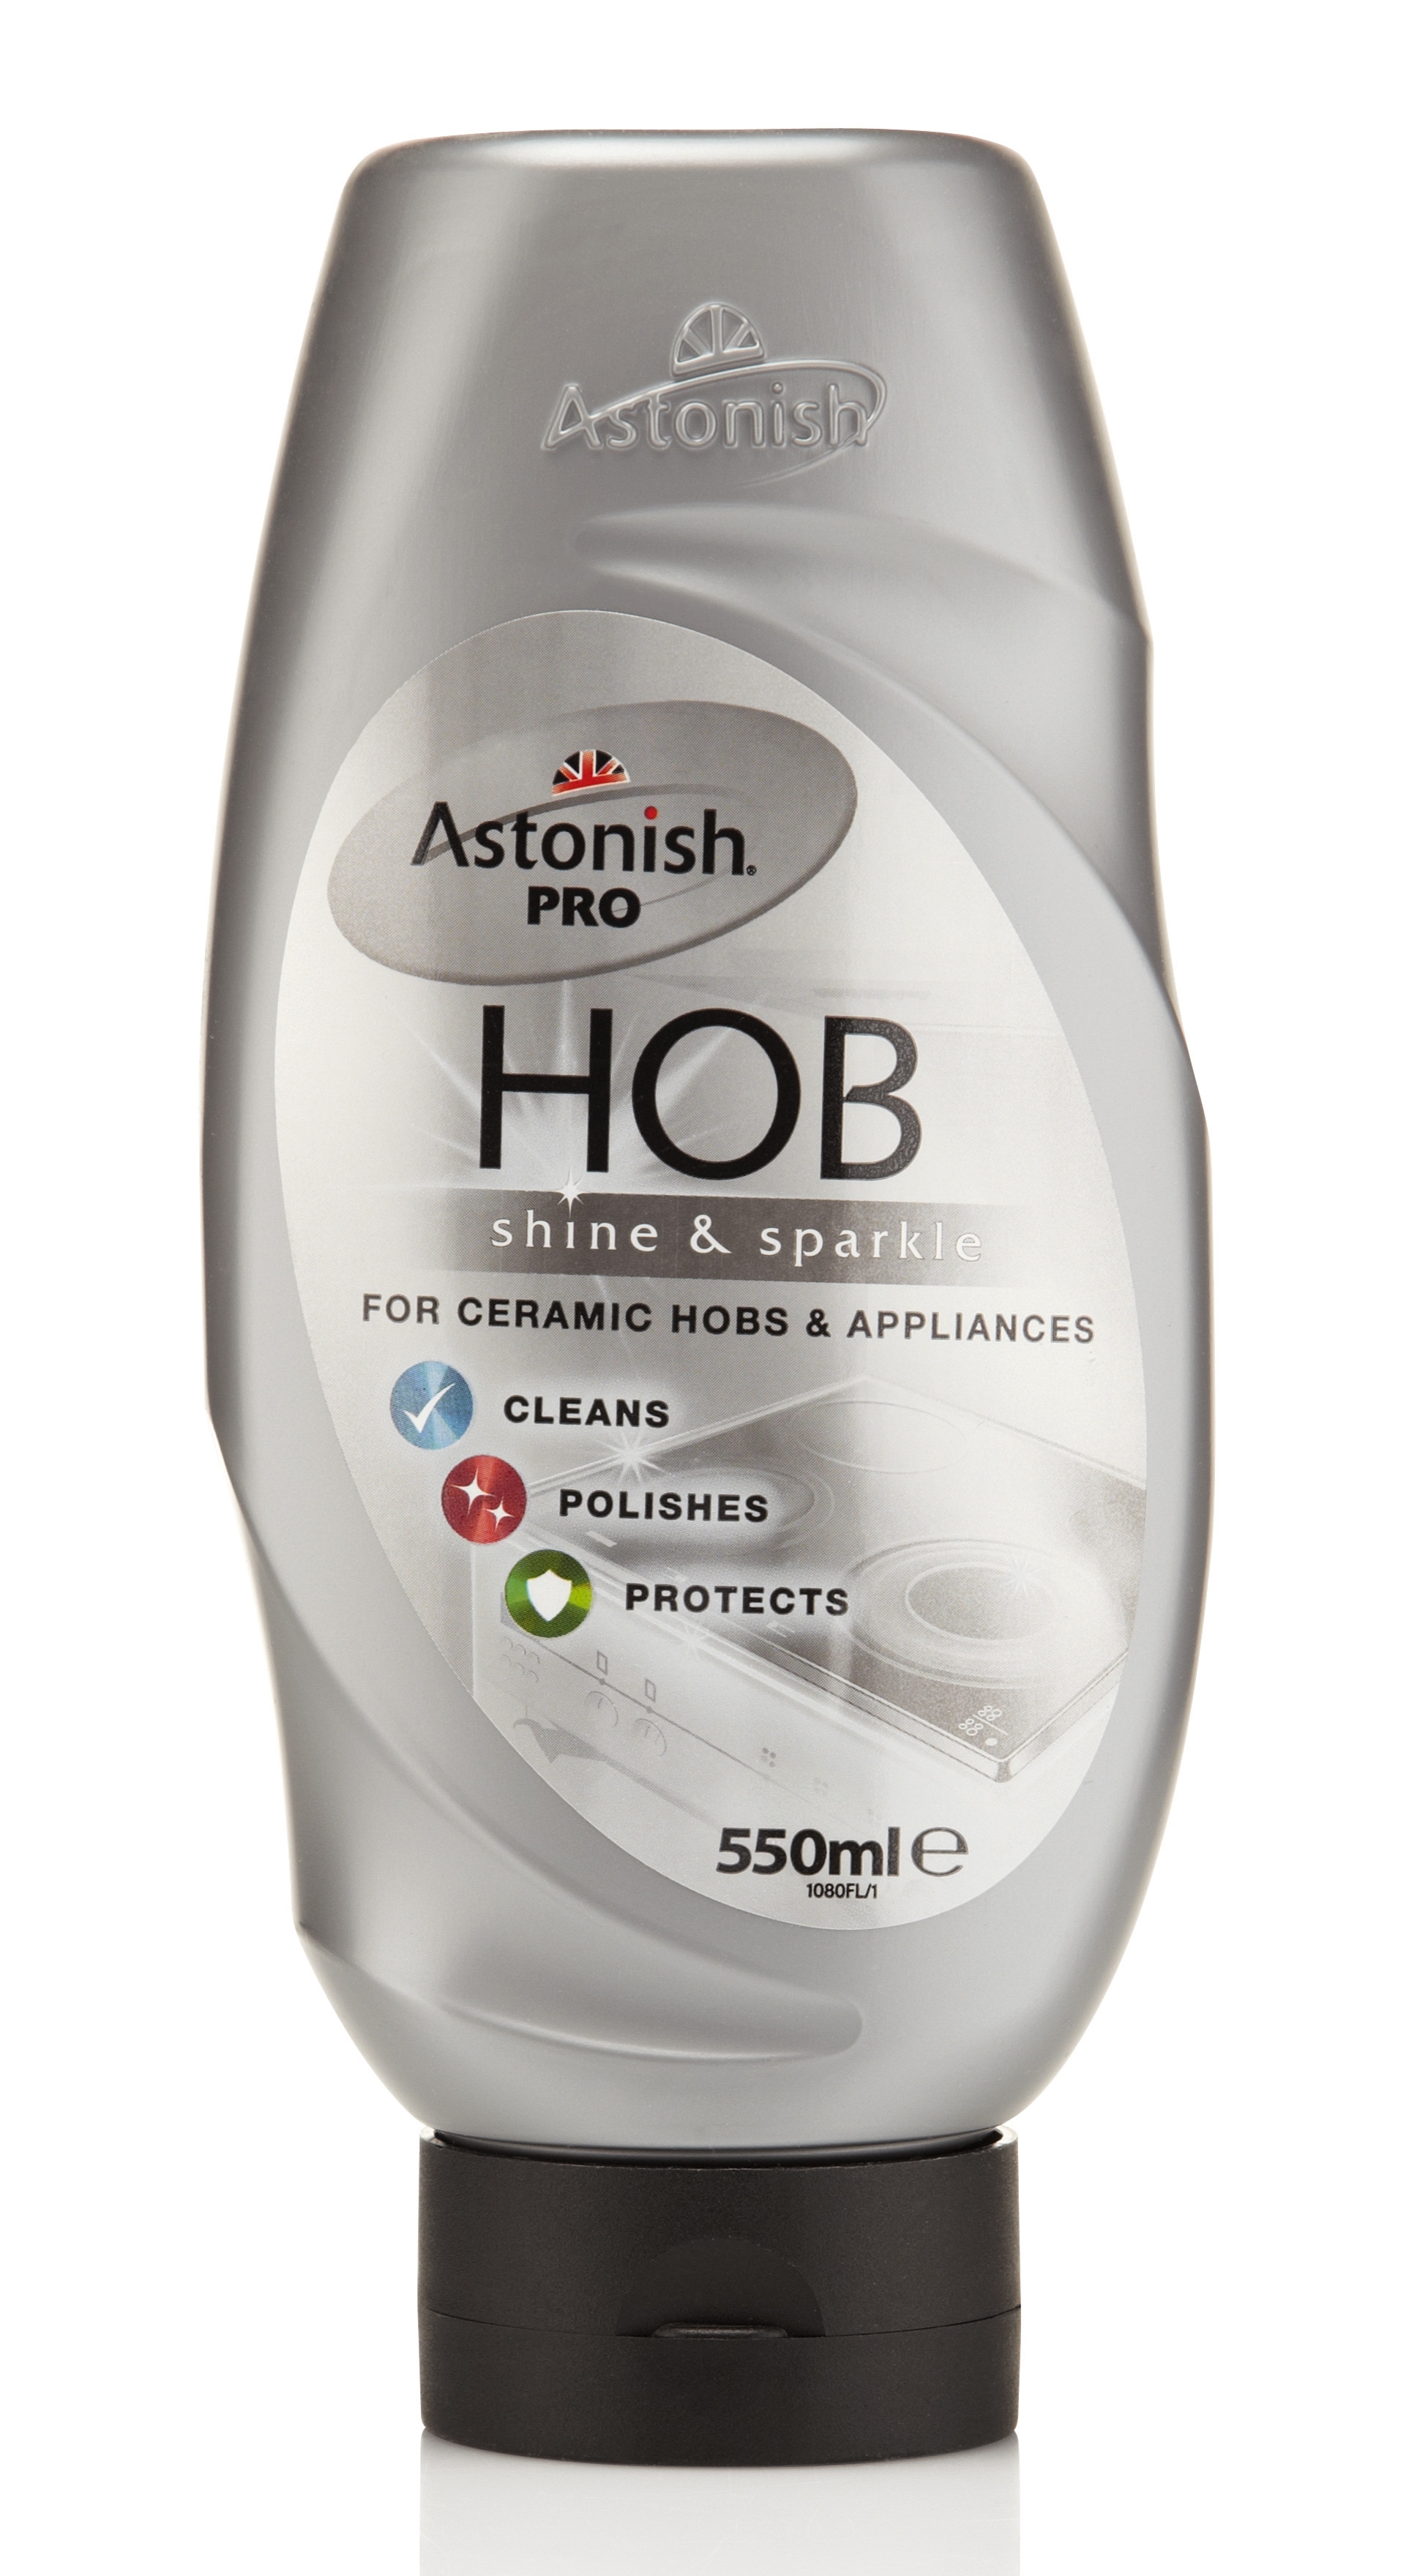 Astonish Pro Hob Shine & Sparkle 550ml.JPG